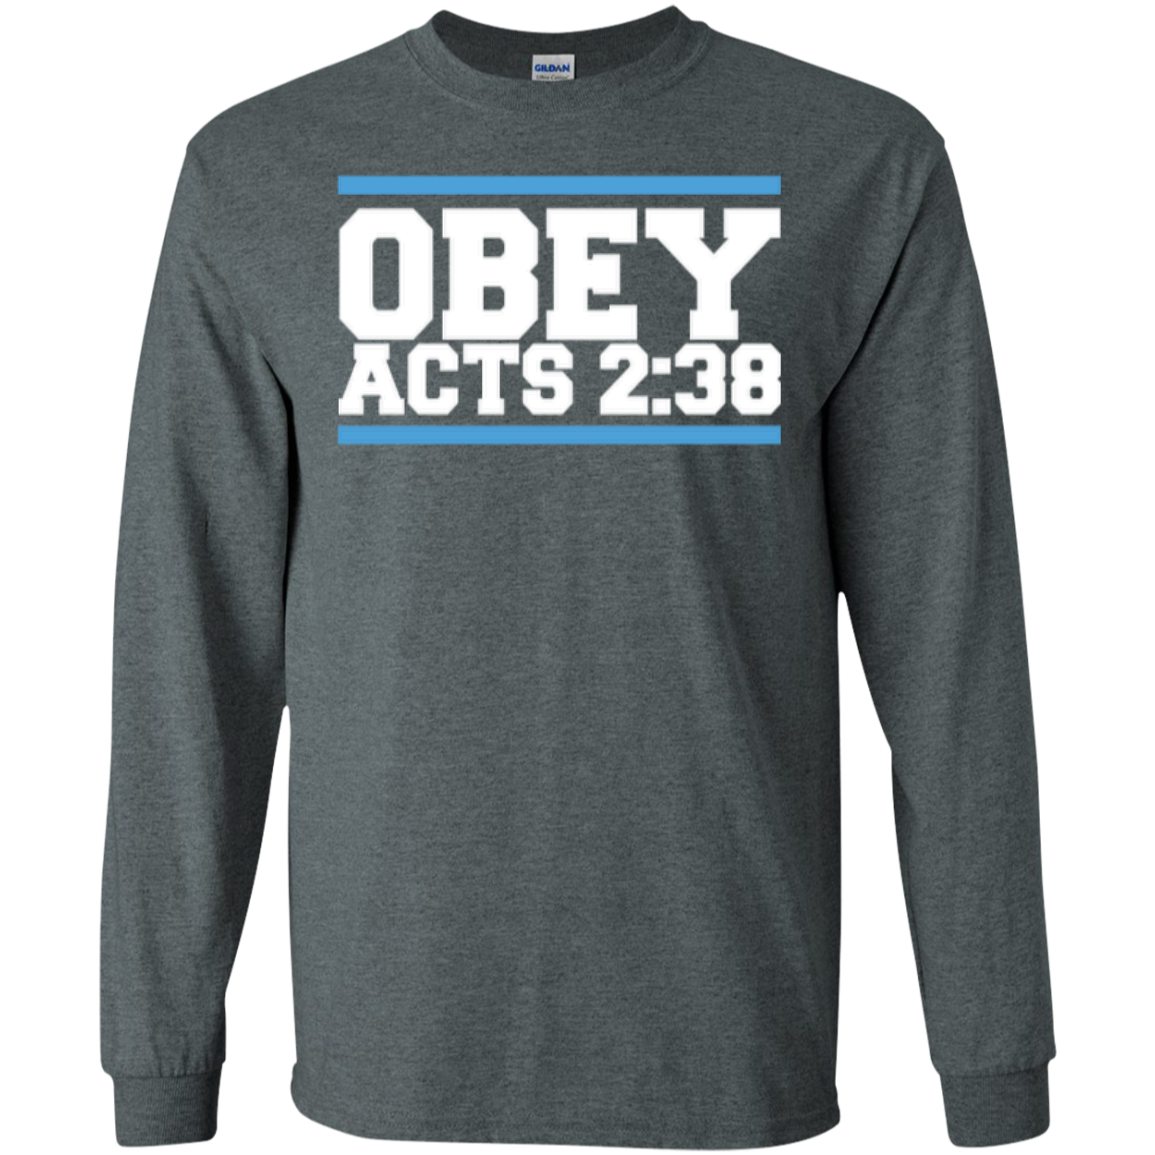 Obey Acts 2:38 - LS Cotton Tshirt - Kick Merch - 2